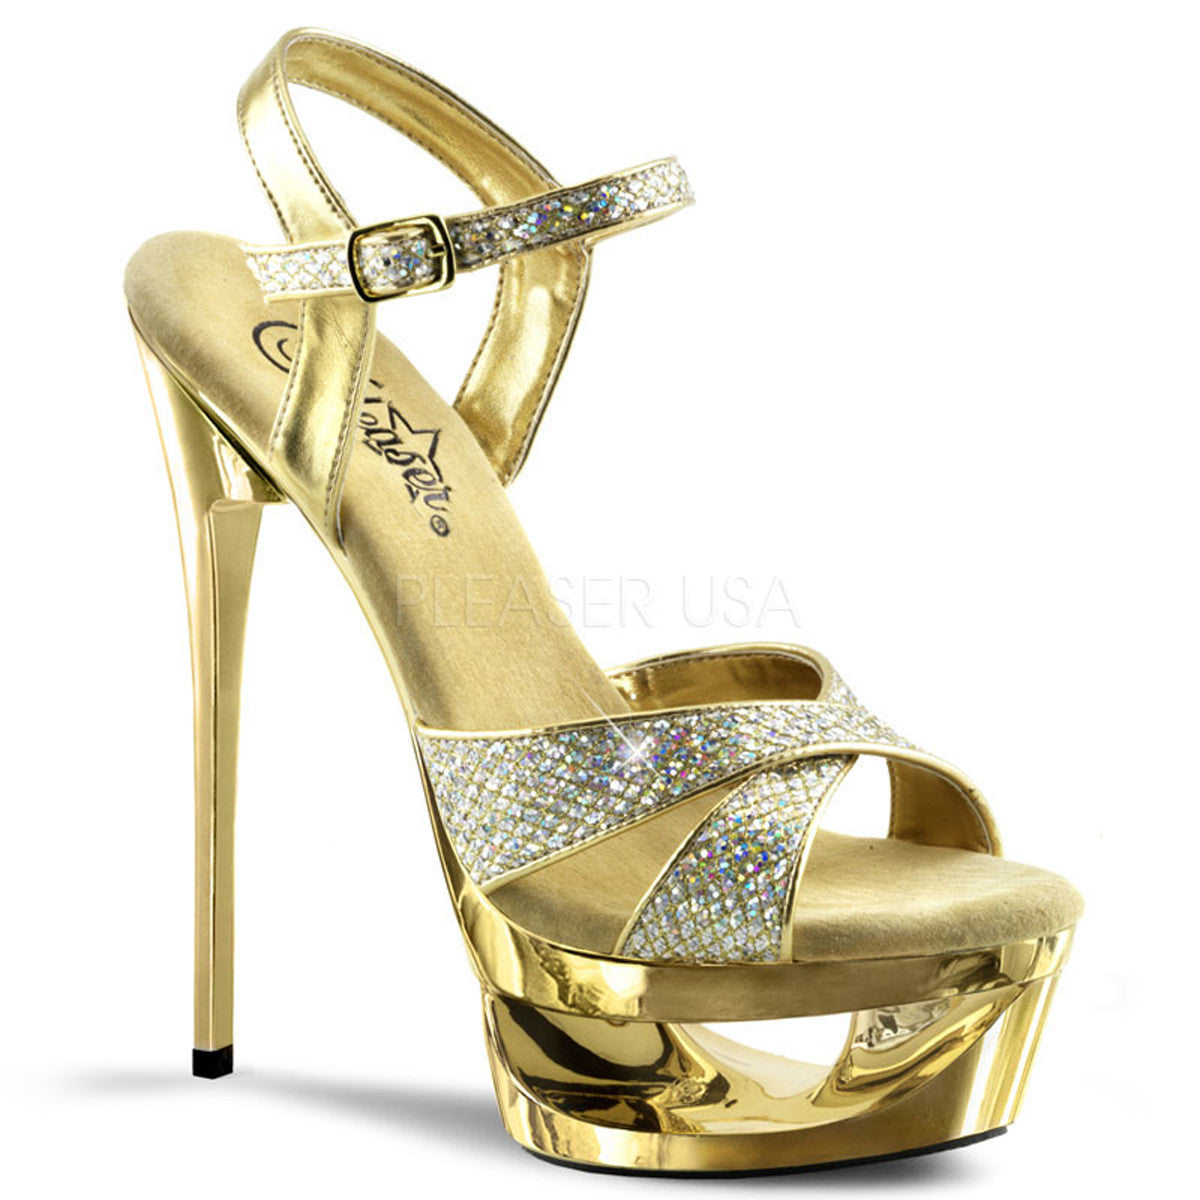 PLEASER ECLIPSE-619G Gold Multi Glitter-Gold Chrome Ankle Strap Sandals - Shoecup.com - 1